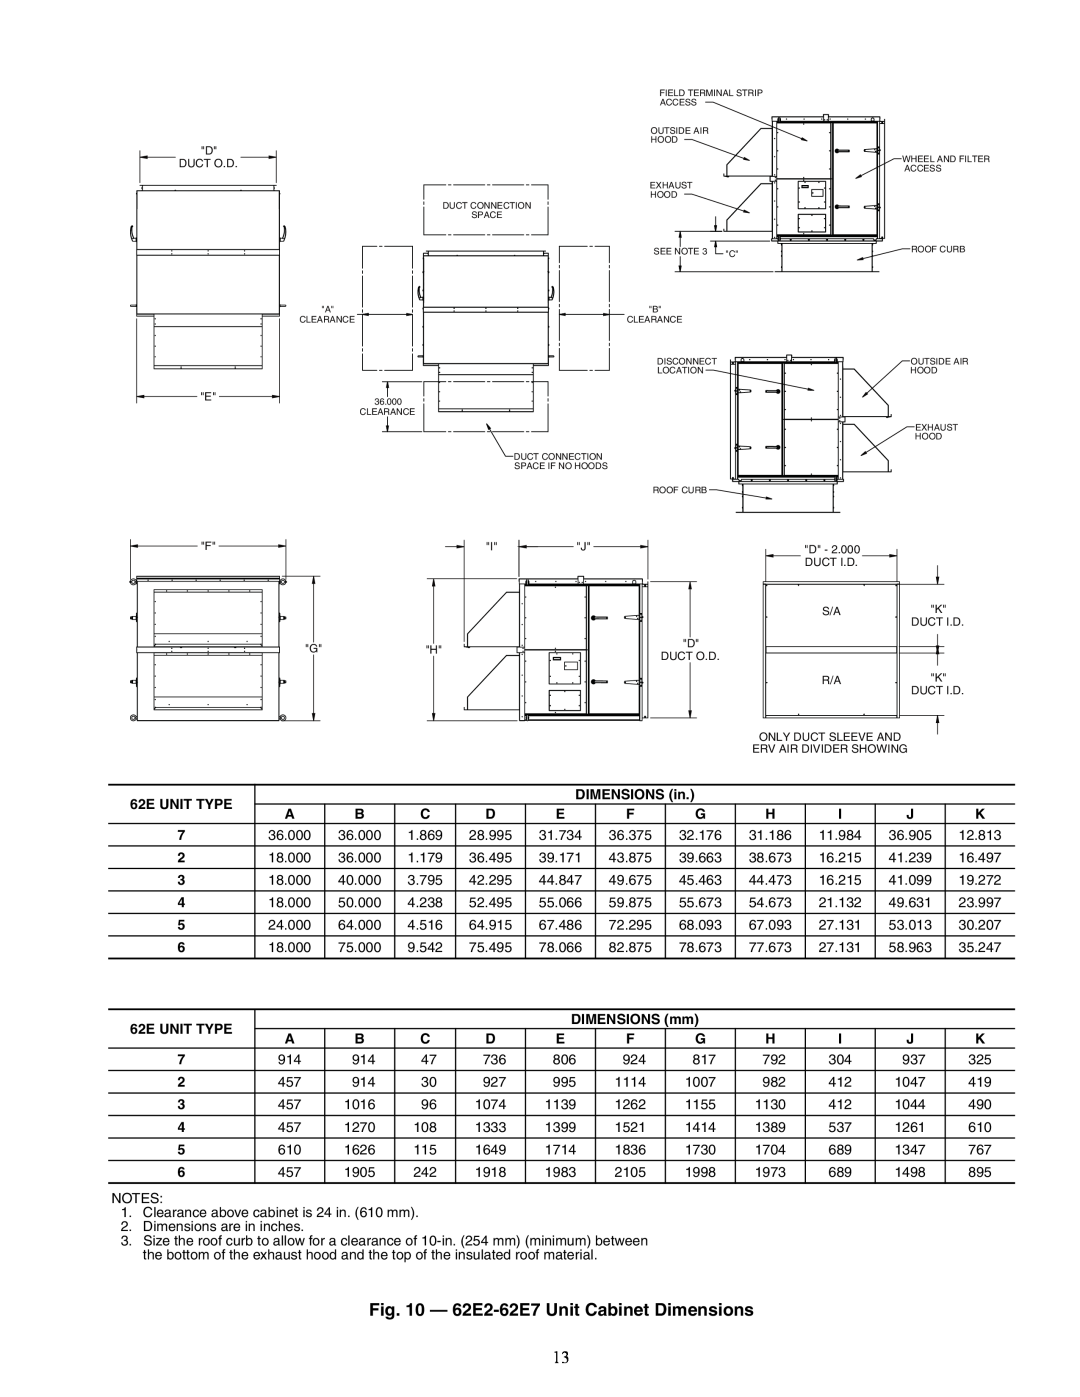 Carrier specifications 62E2-62E7Unit Cabinet Dimensions 